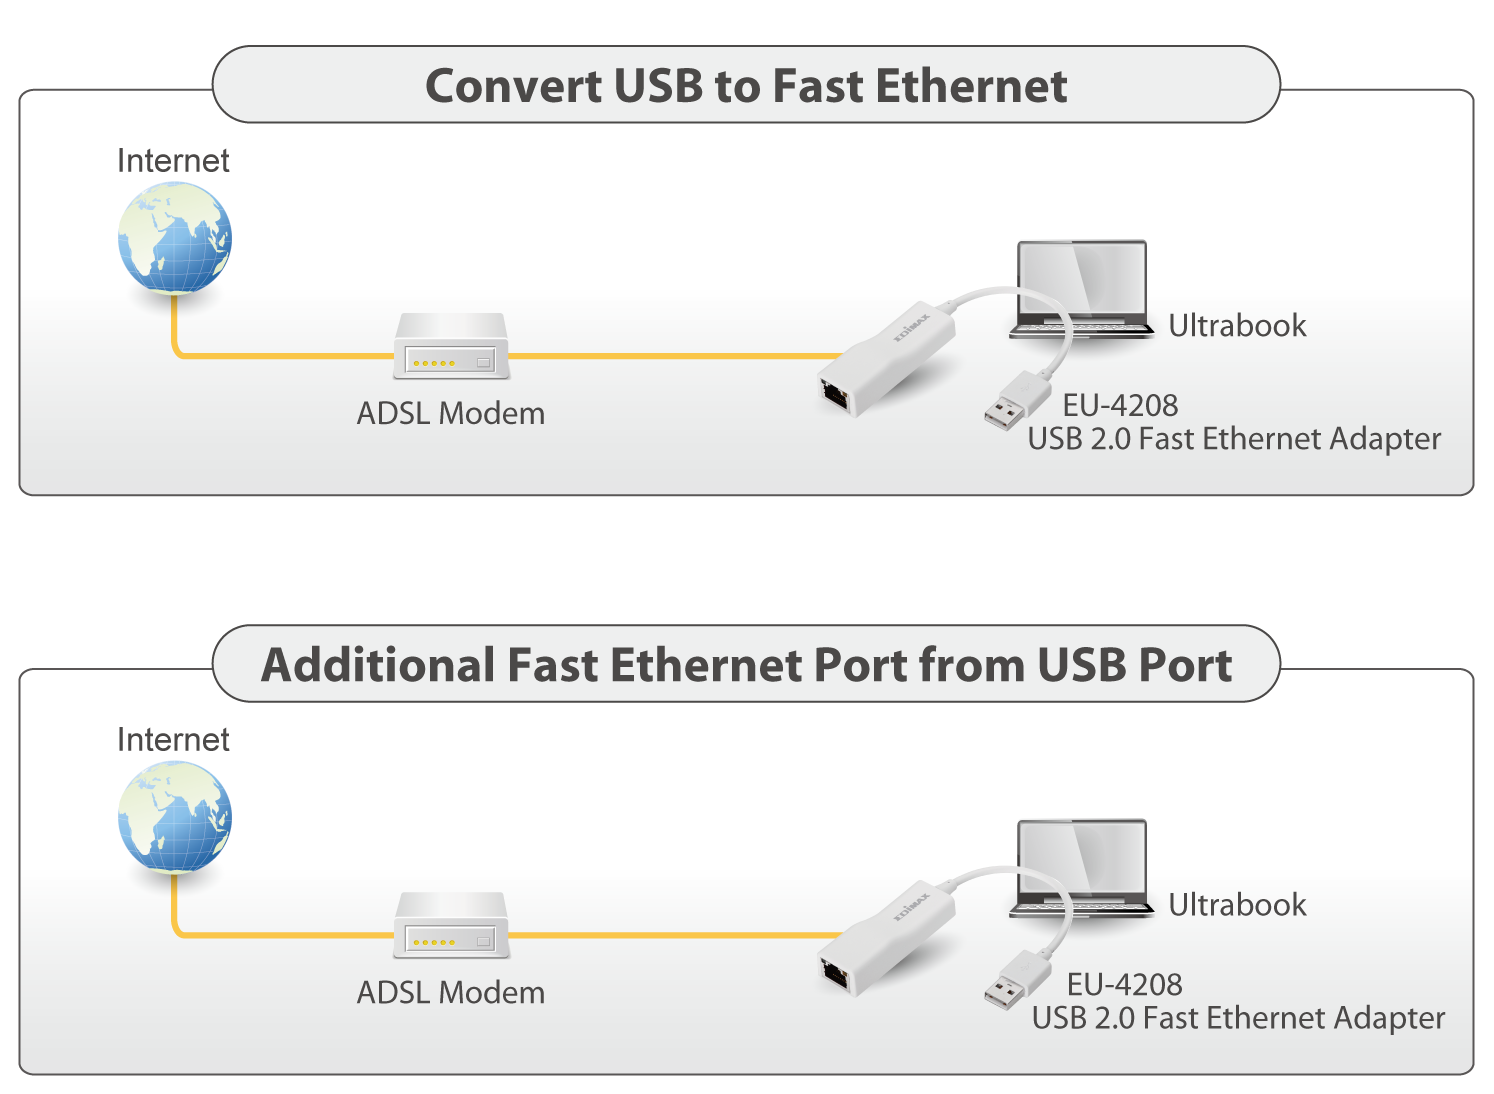 Edimax USB 2.0 Fast Ethernet Adapter EU-4208_USB_Adapter_applicaiton_diagram.png